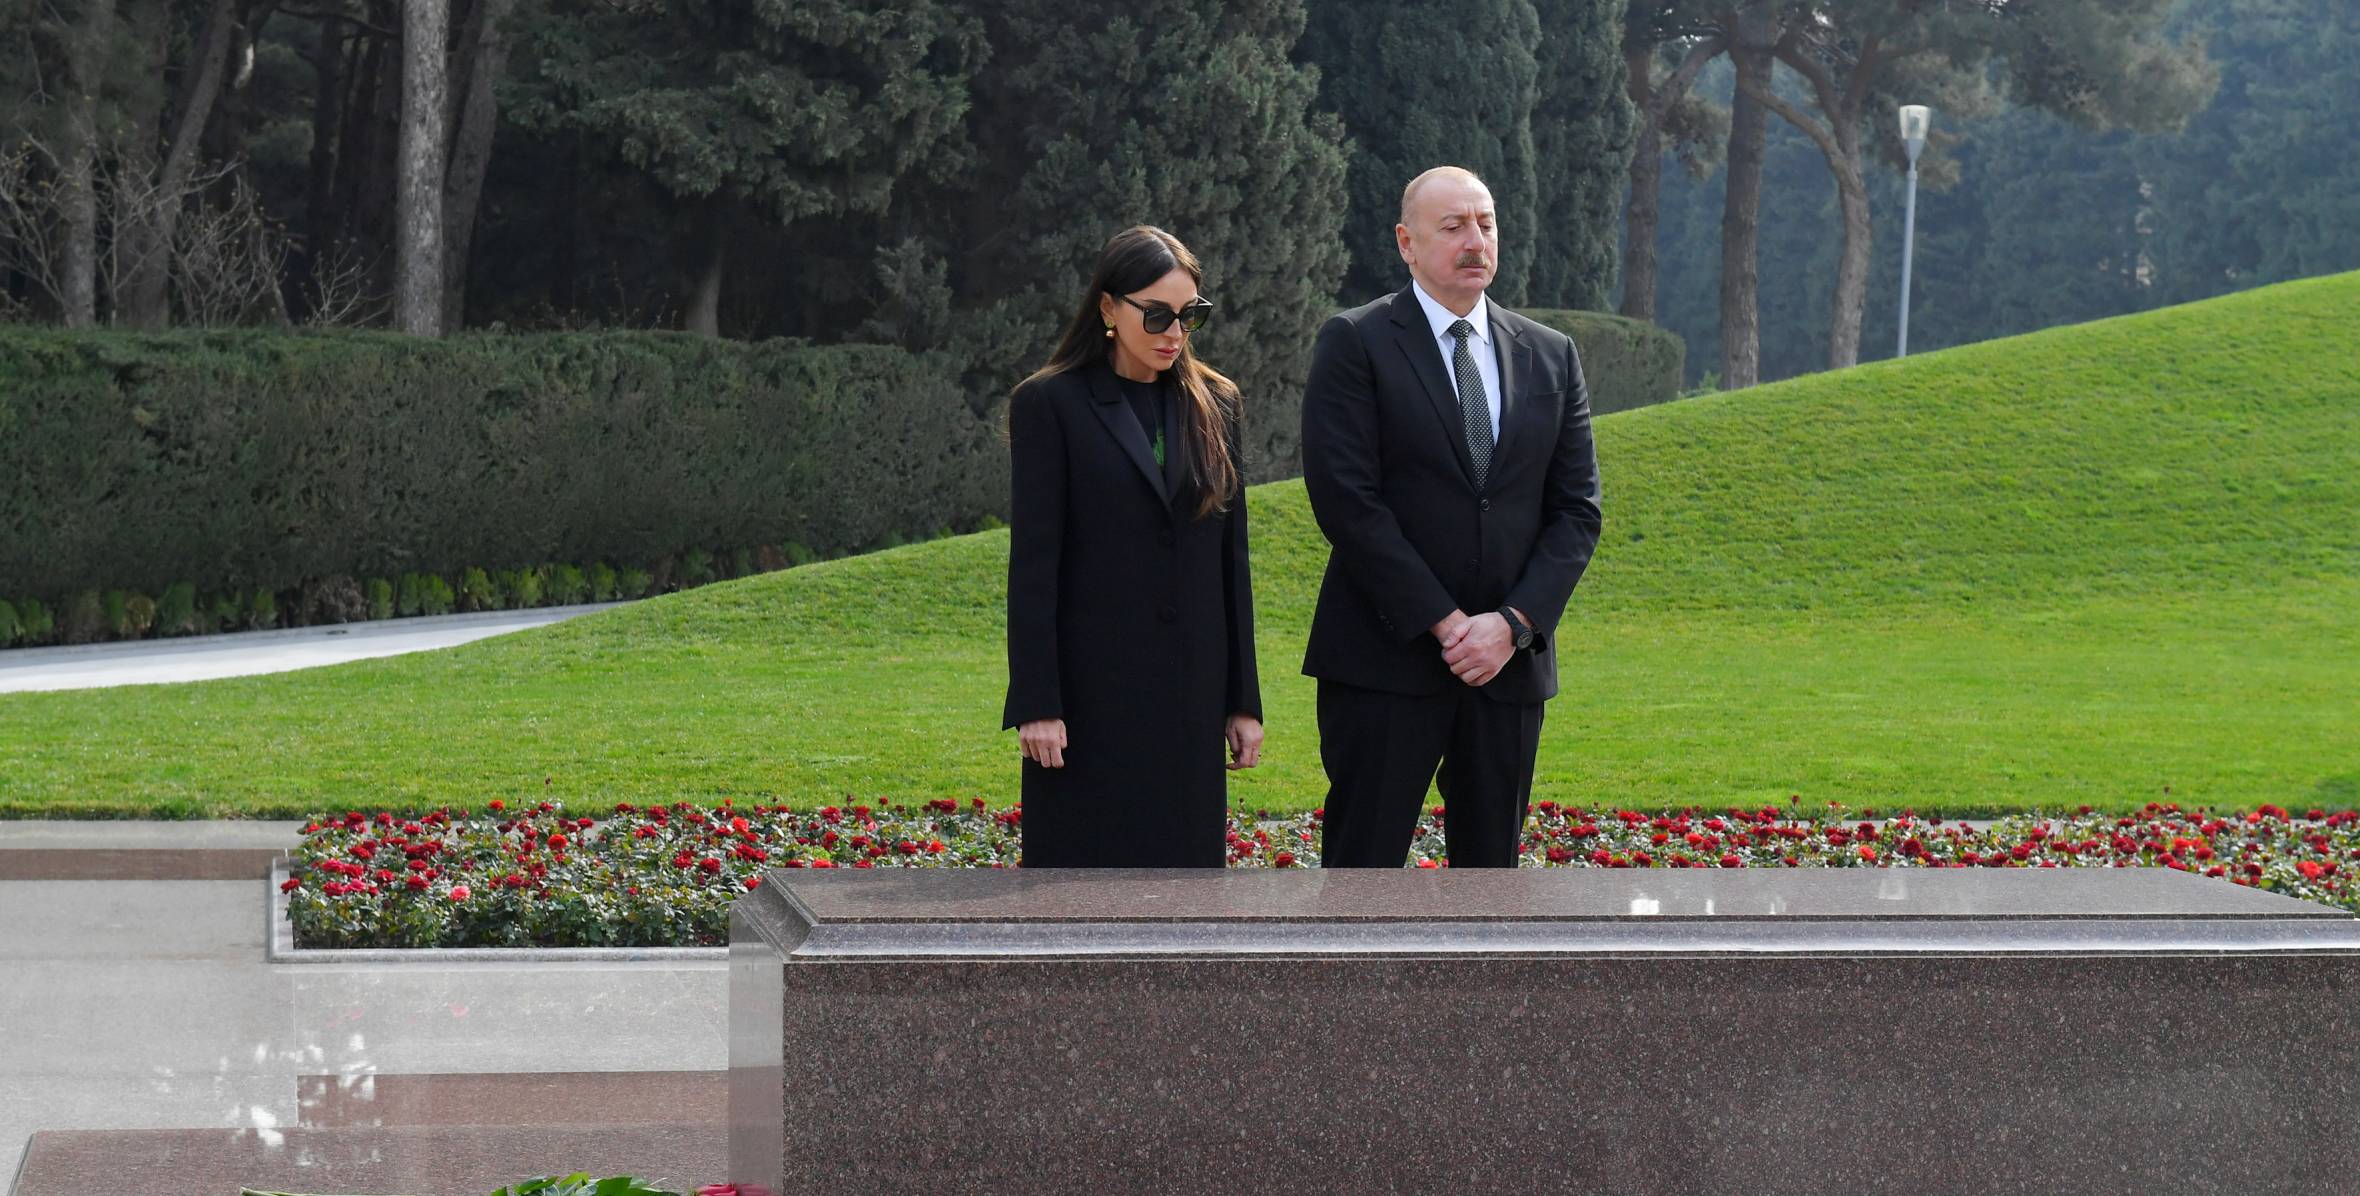 Ilham Aliyev paid respect to National Leader Heydar Aliyev